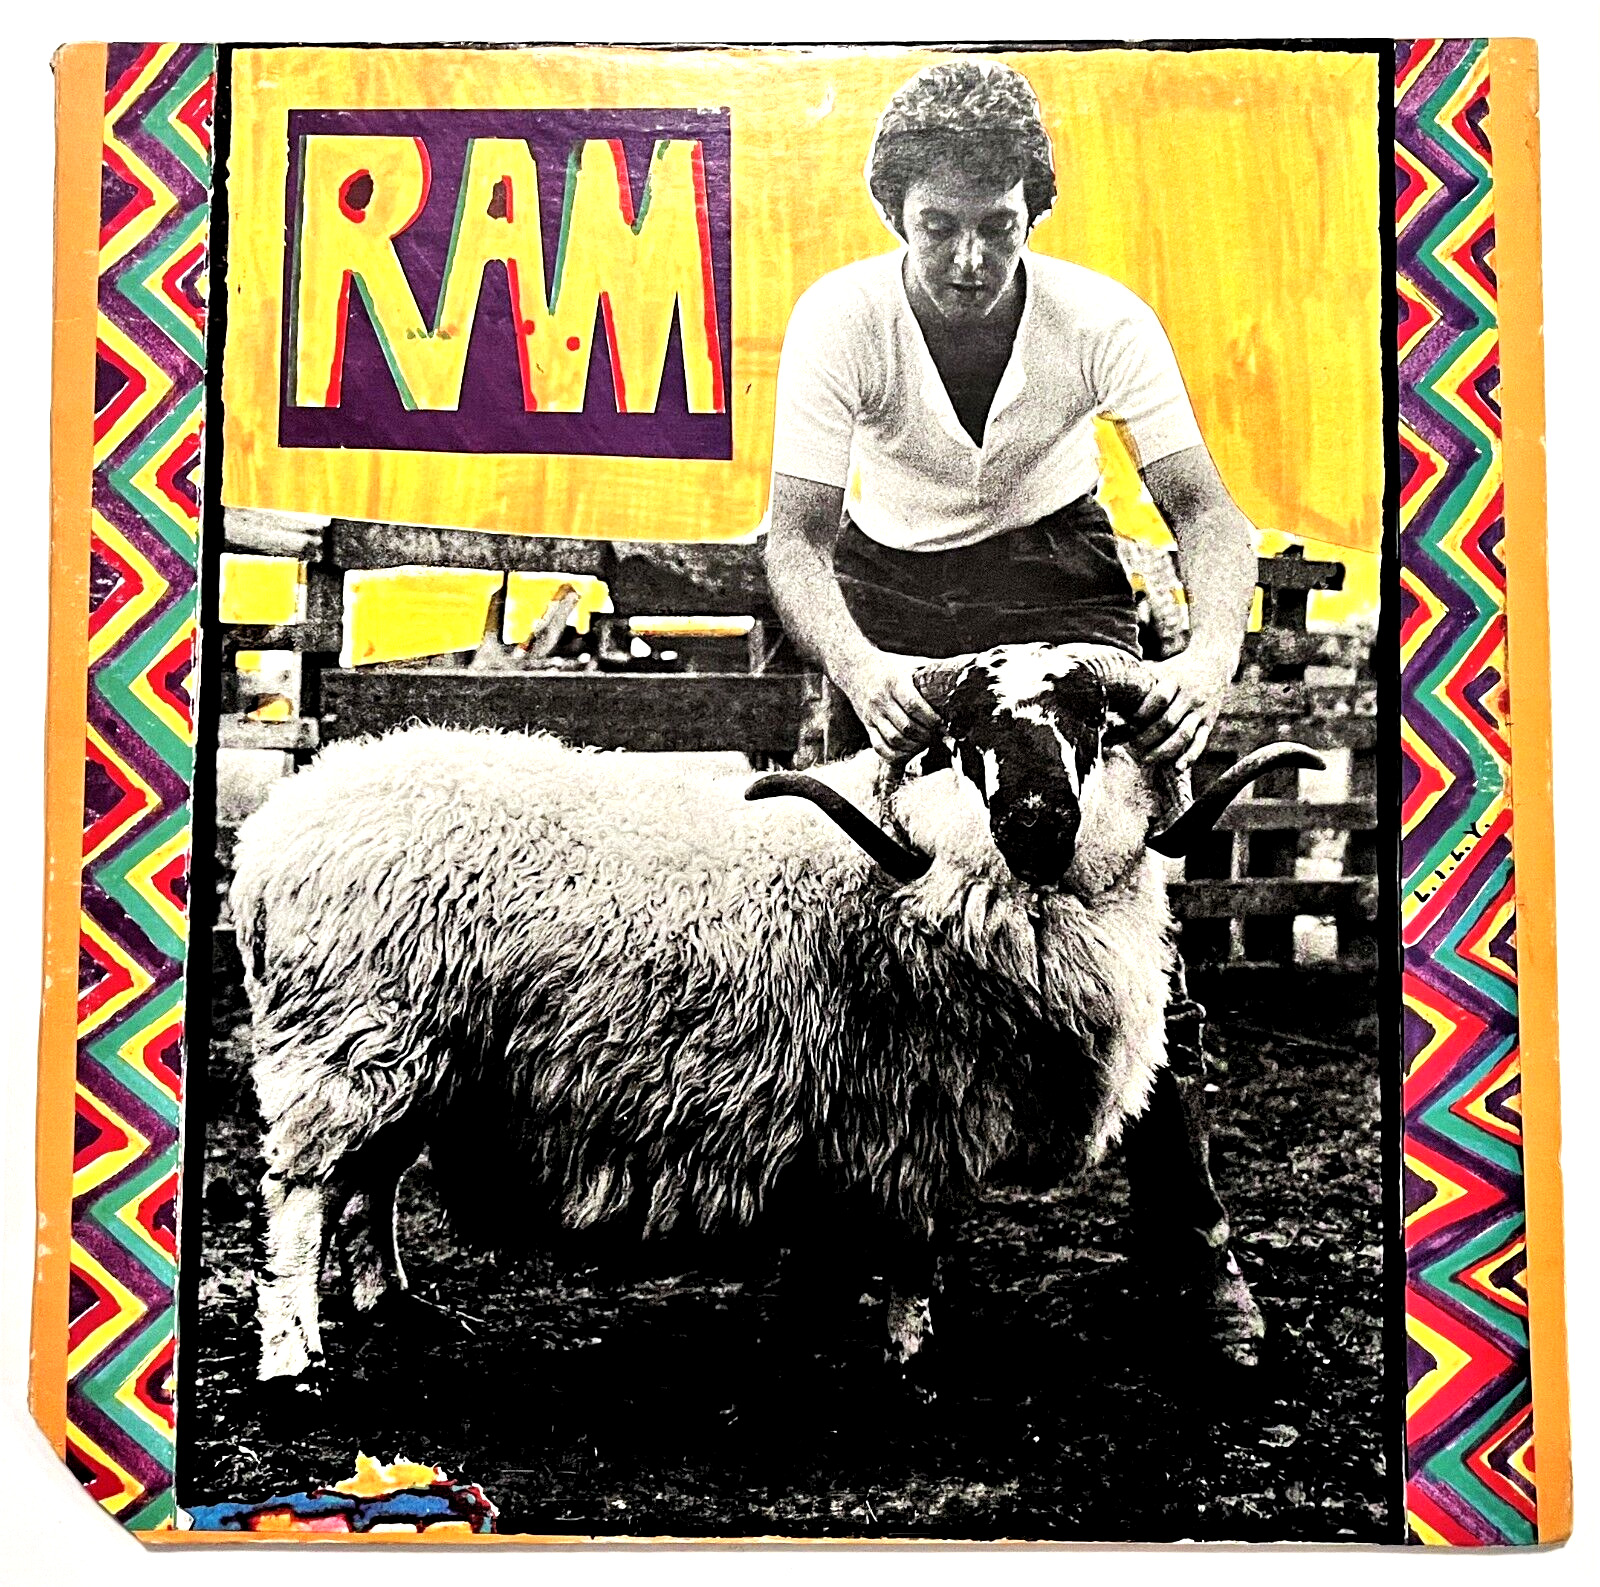 Paul and Linda McCartney – RAM - Apple SMAS-3375 (1971 GF LP   EX)